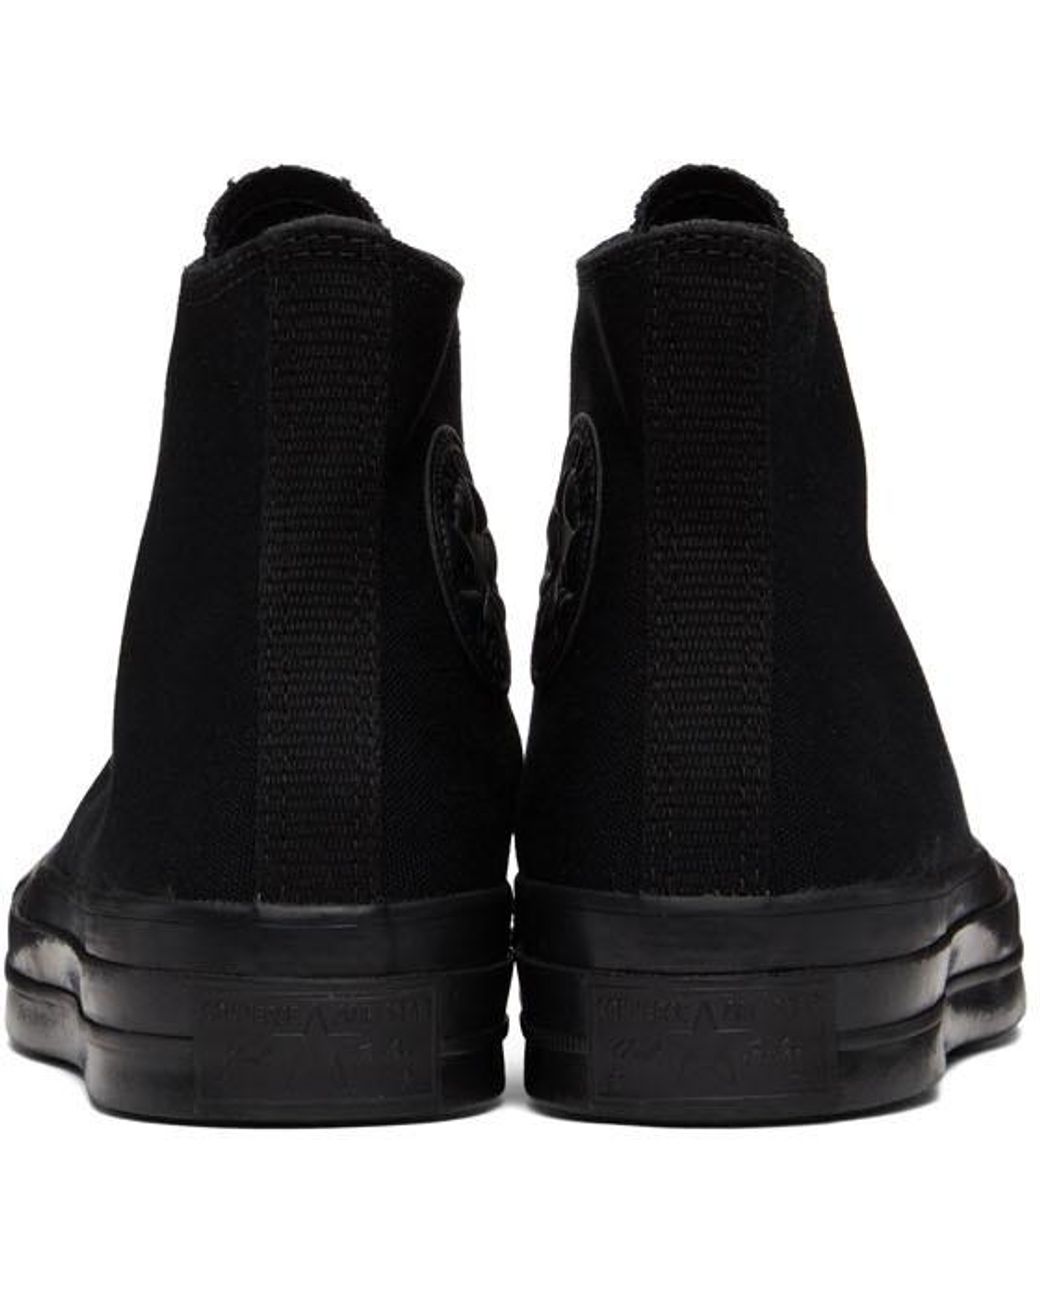 Converse Canvas Black Monochrome Chuck 70 High Sneakers | Lyst